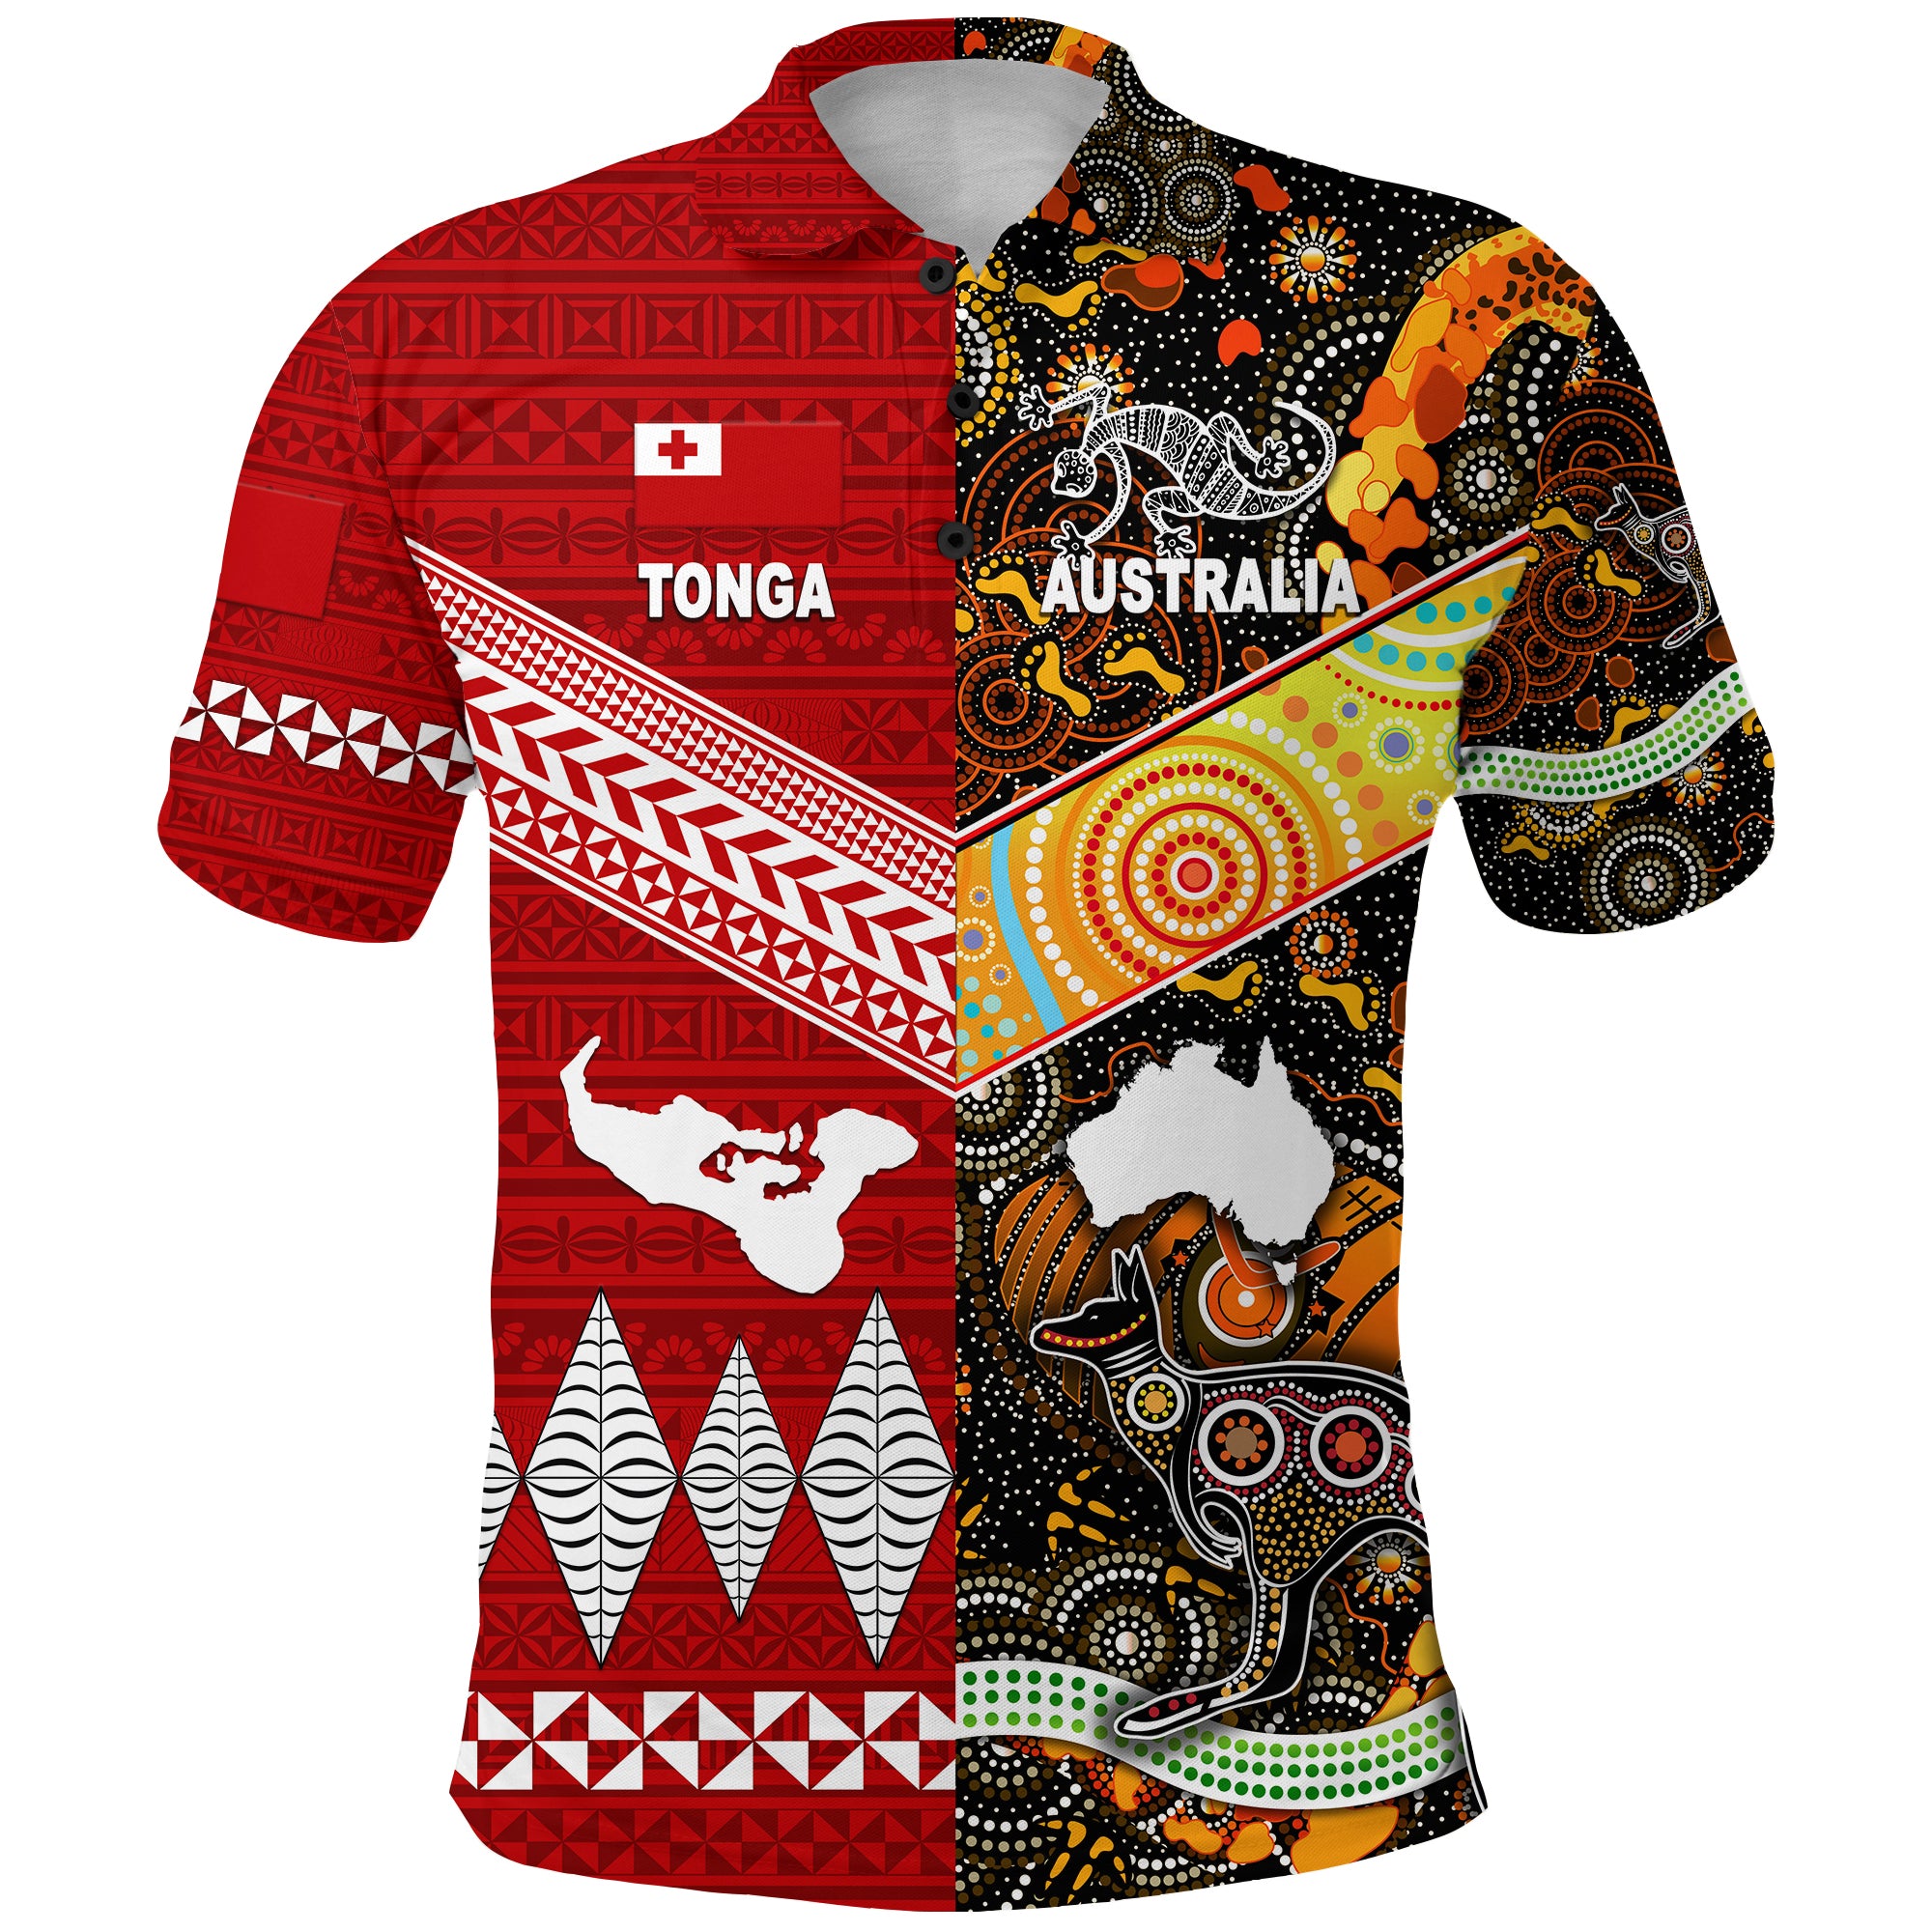 Tonga Ngatu and Australia Aboriginal Polo Shirt Together LT8 - Polynesian Pride